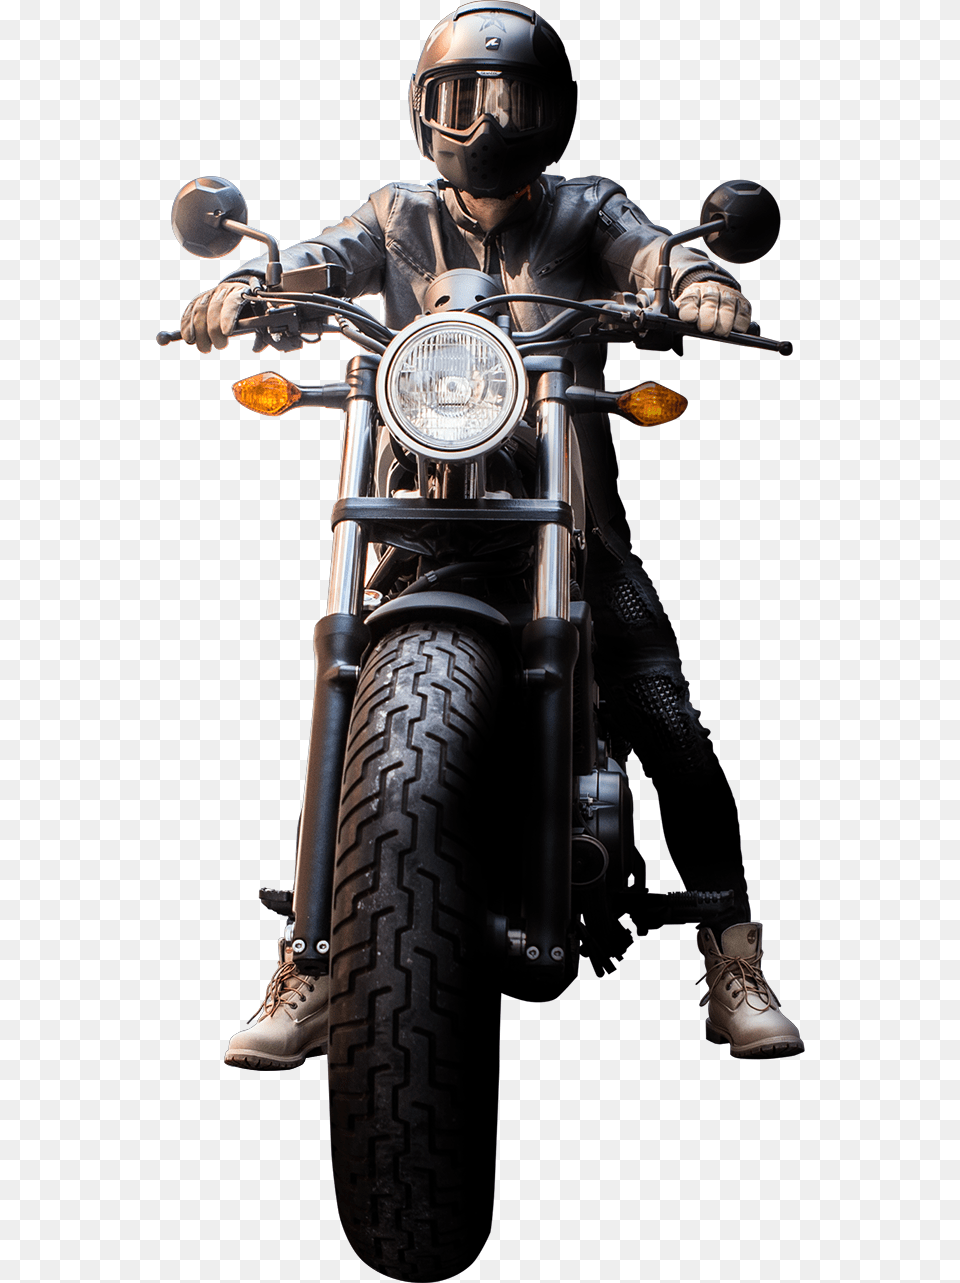 Motorcycle Rider, Wheel, Helmet, Machine, Vehicle Free Transparent Png